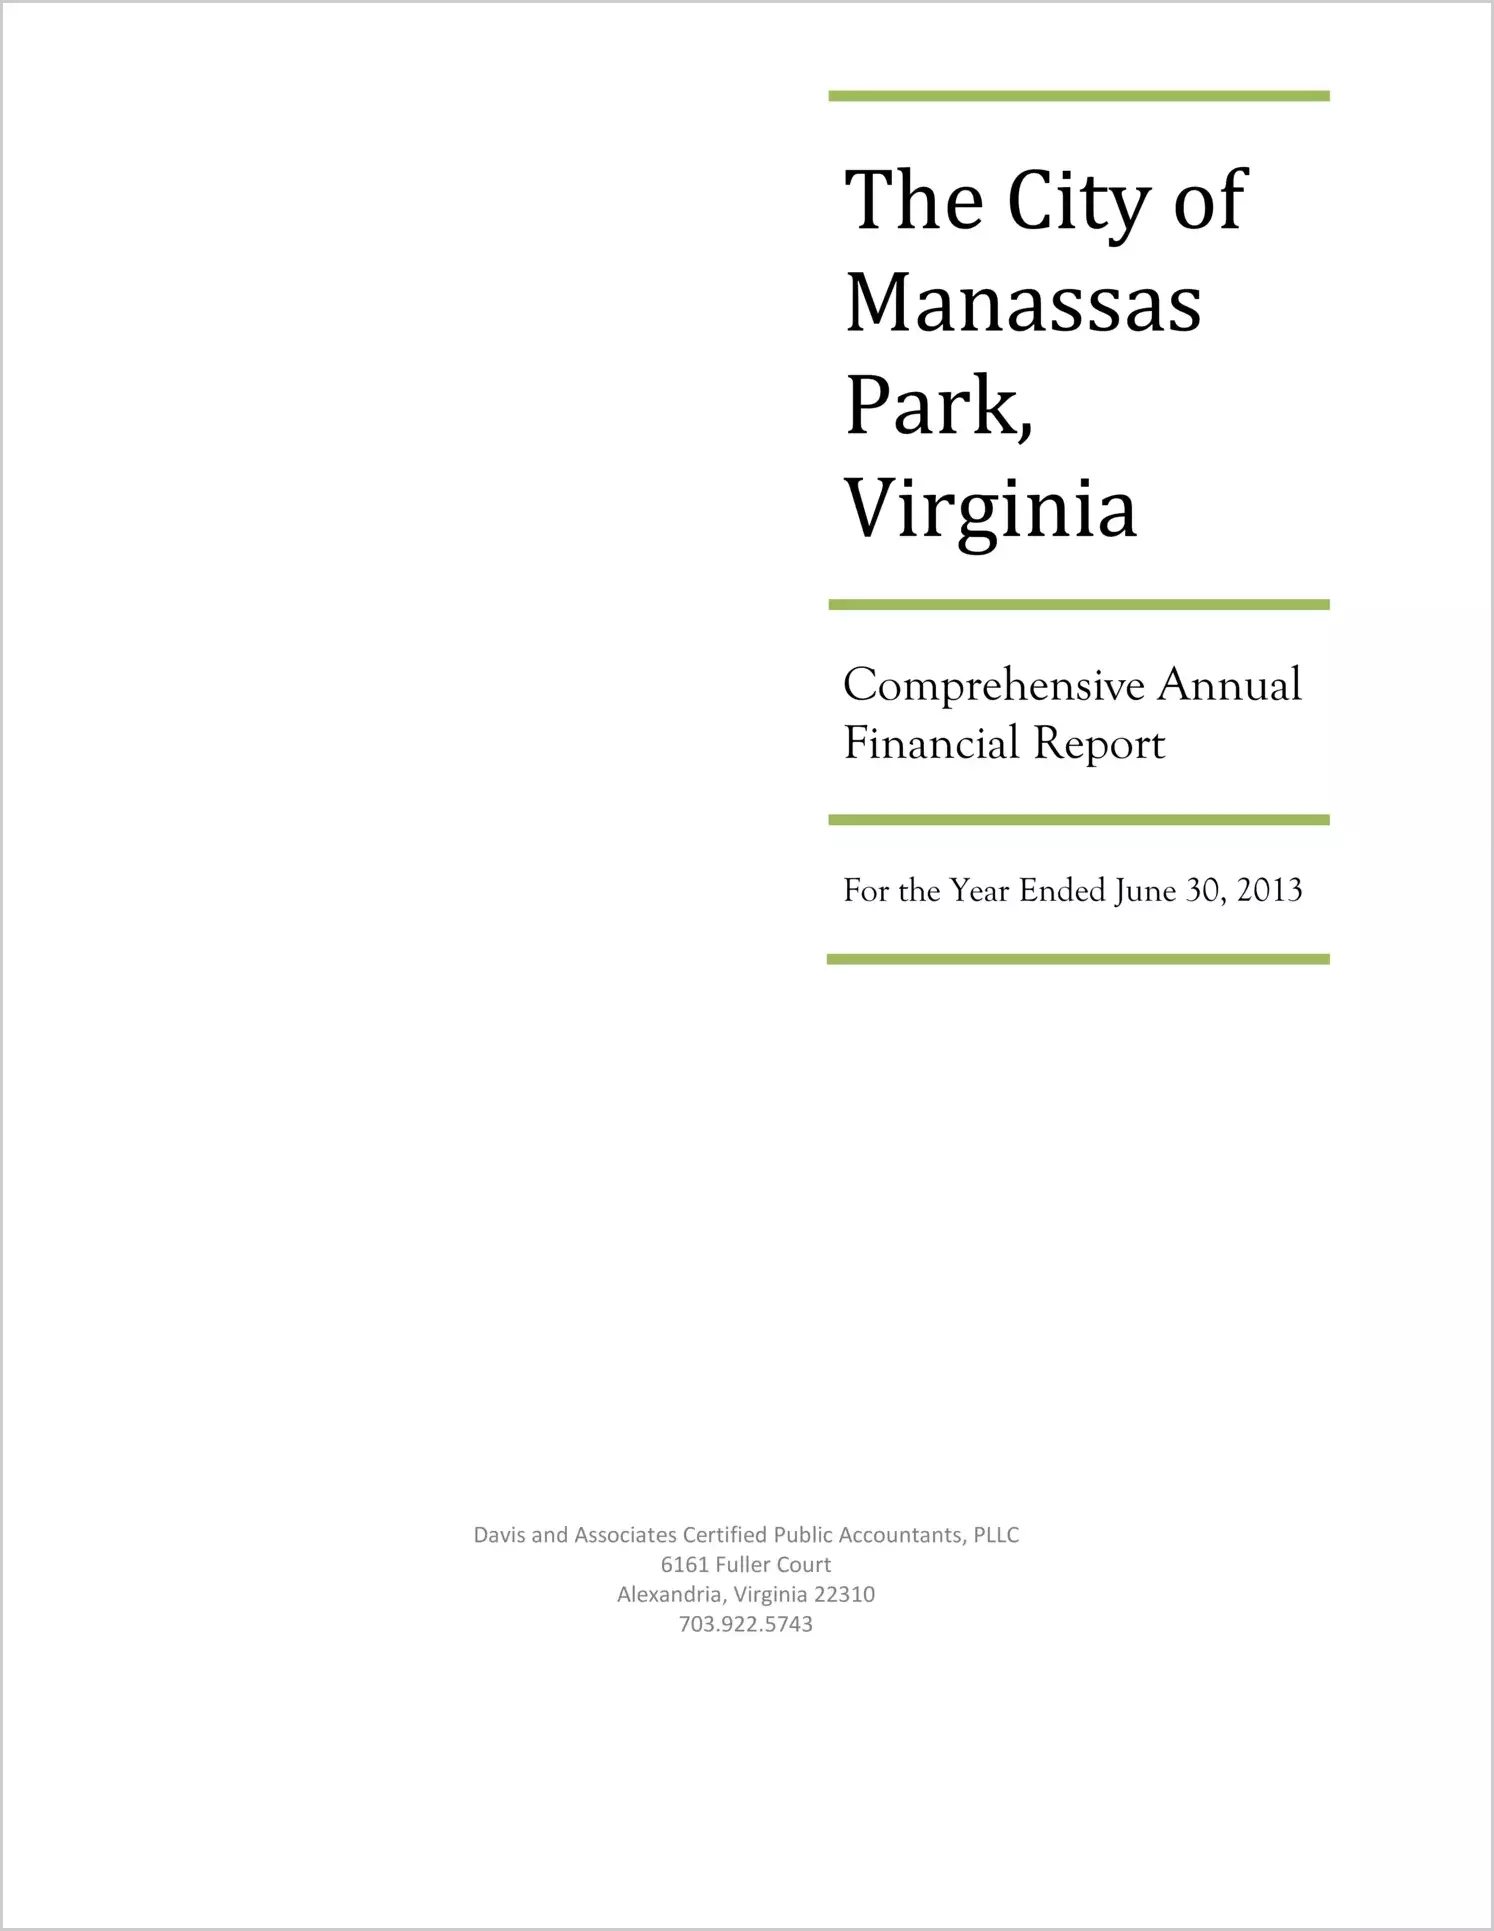 2013 Annual Financial Report for City of Manassas Park